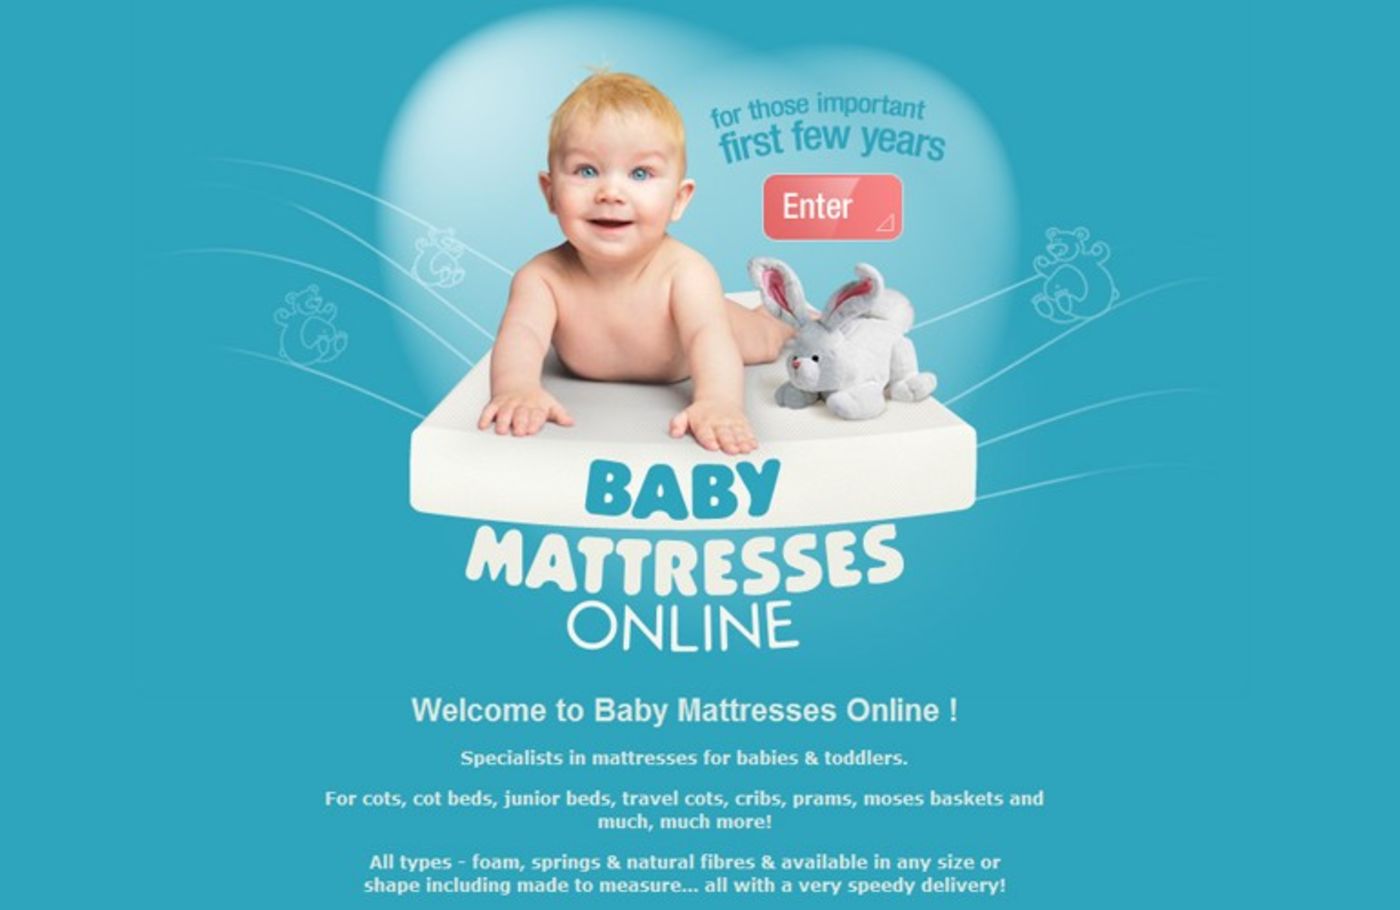 Baby Mattresses Online (2006) Welcome